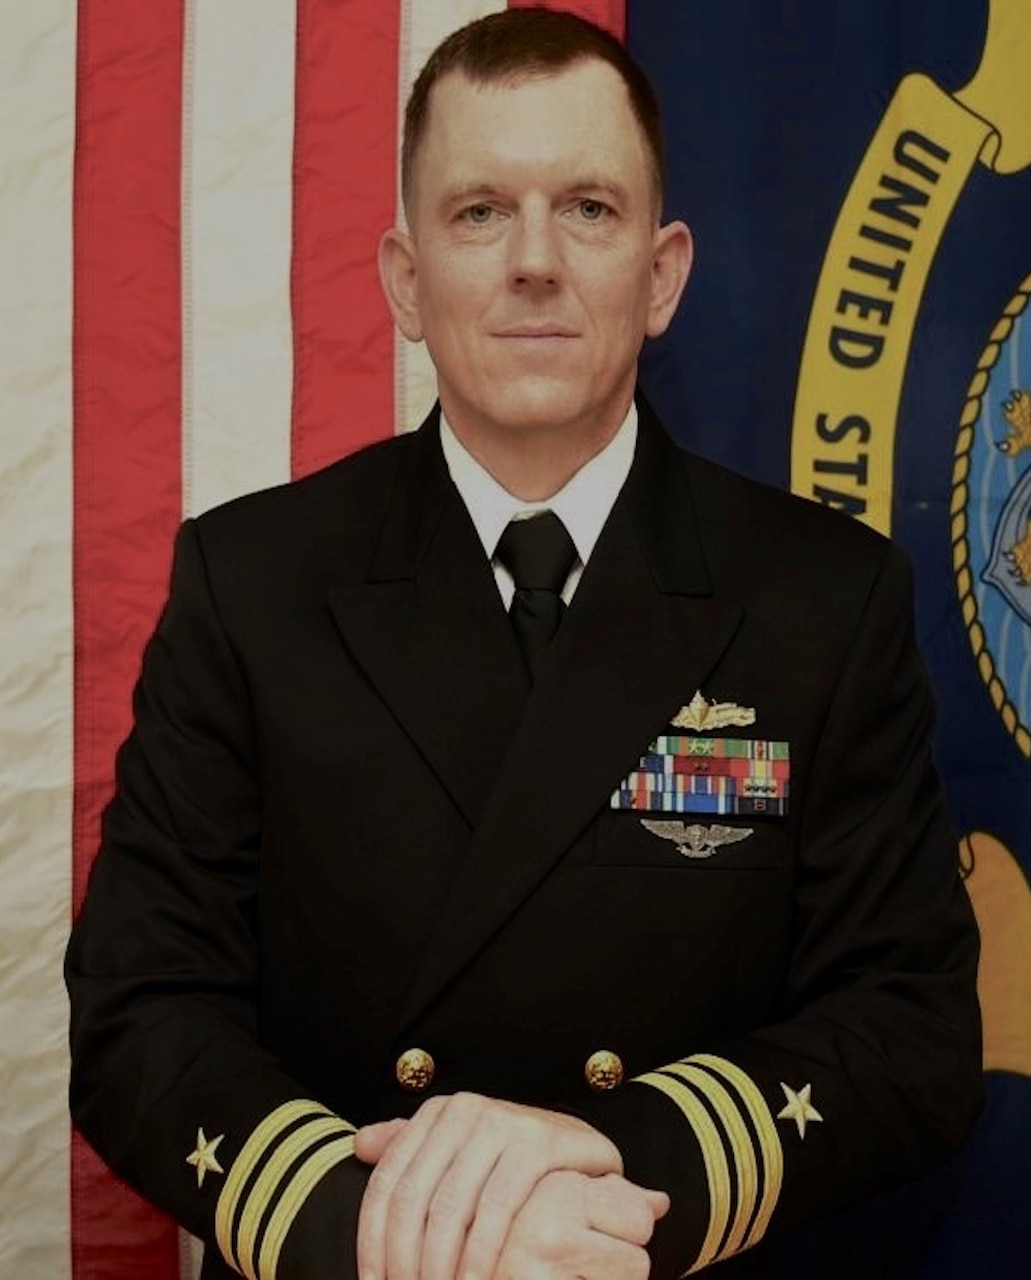 Commander Timothy M. Winters